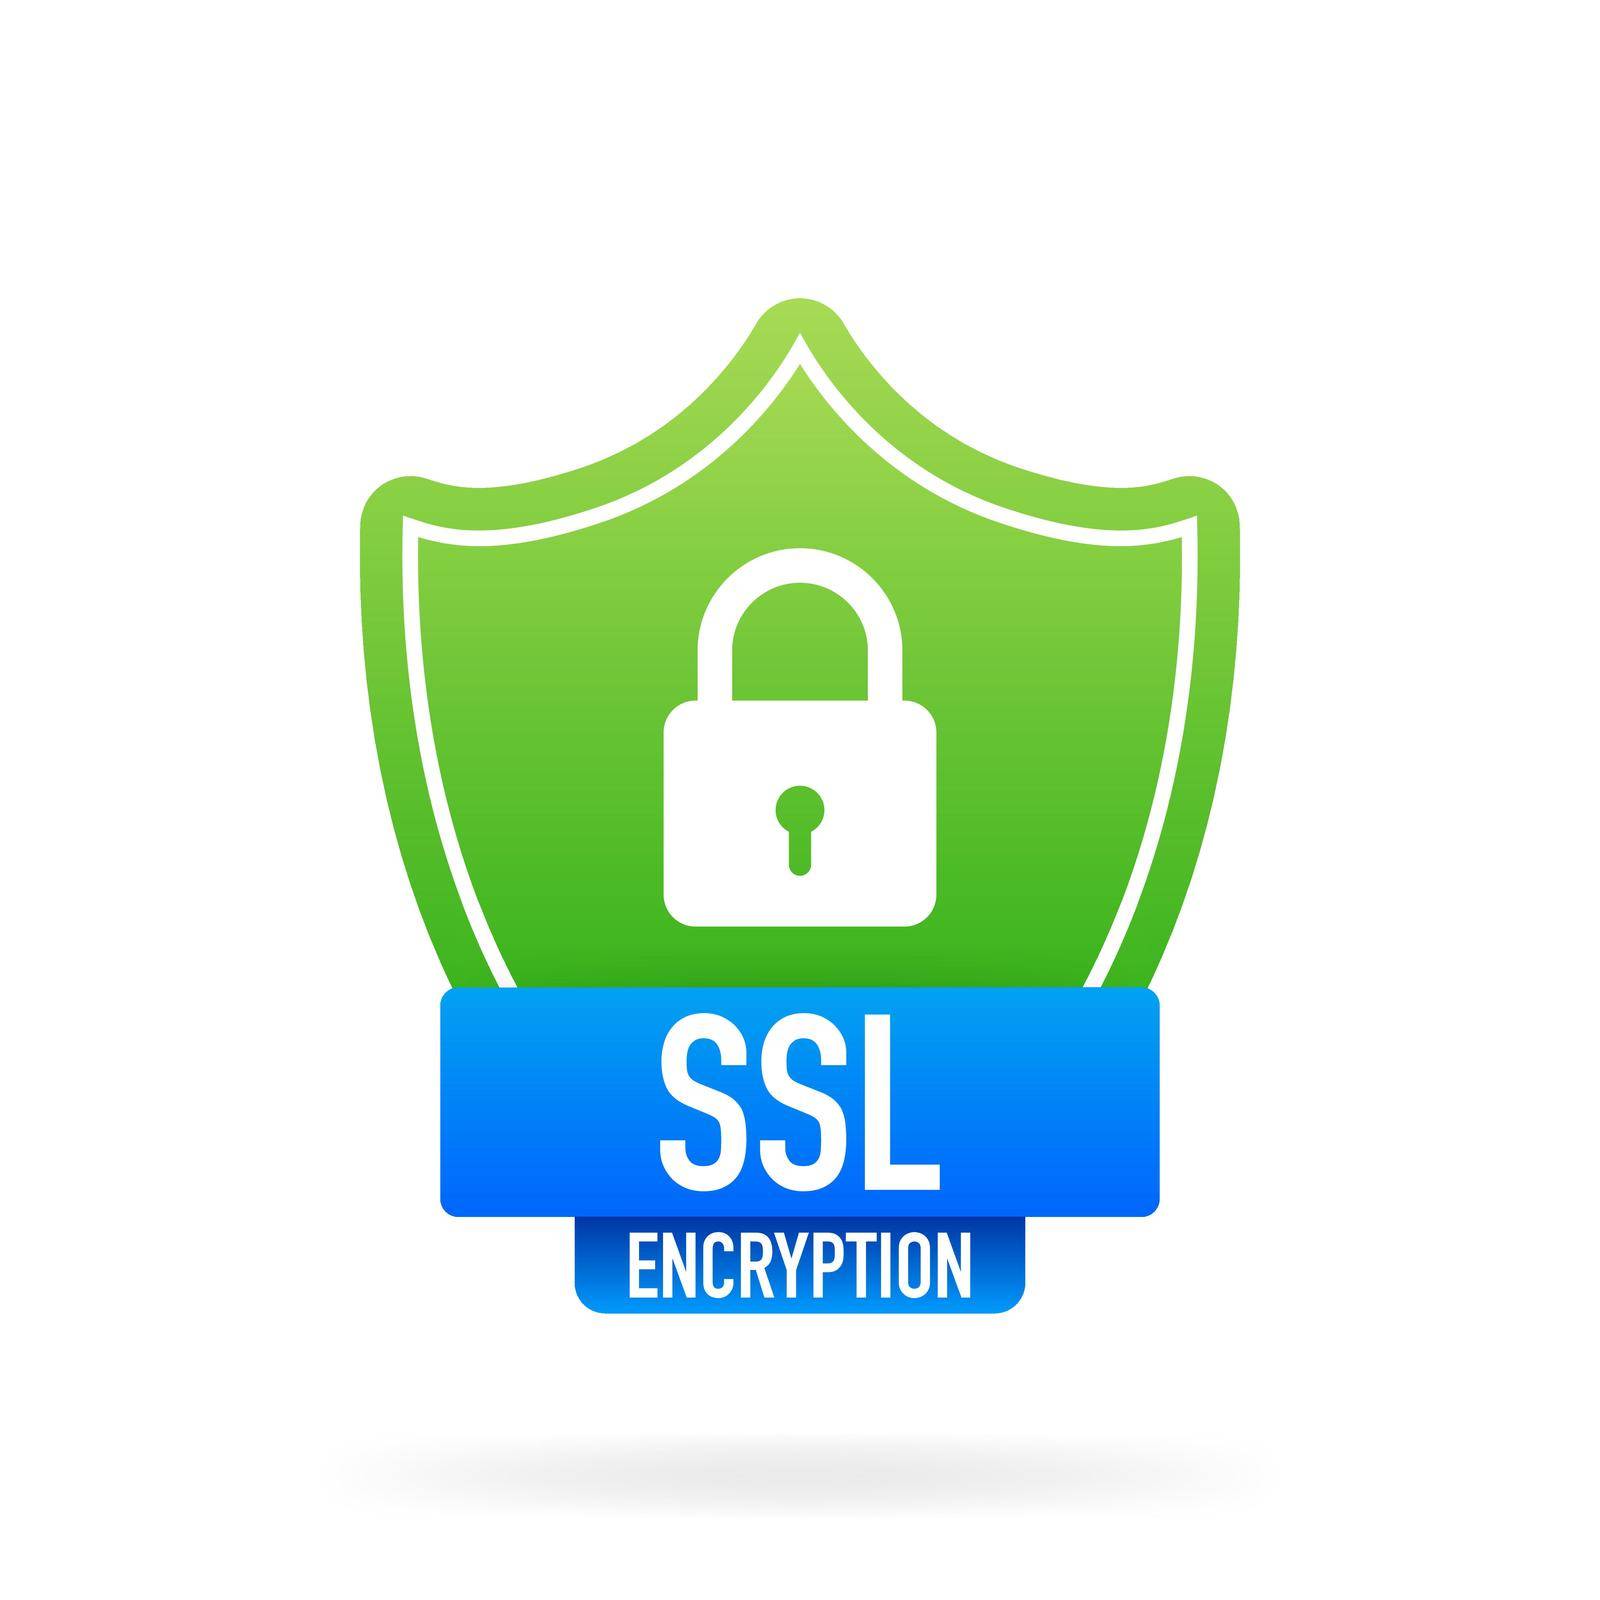 SSL encryption secure badge on white background. Green banner. Vector illustration